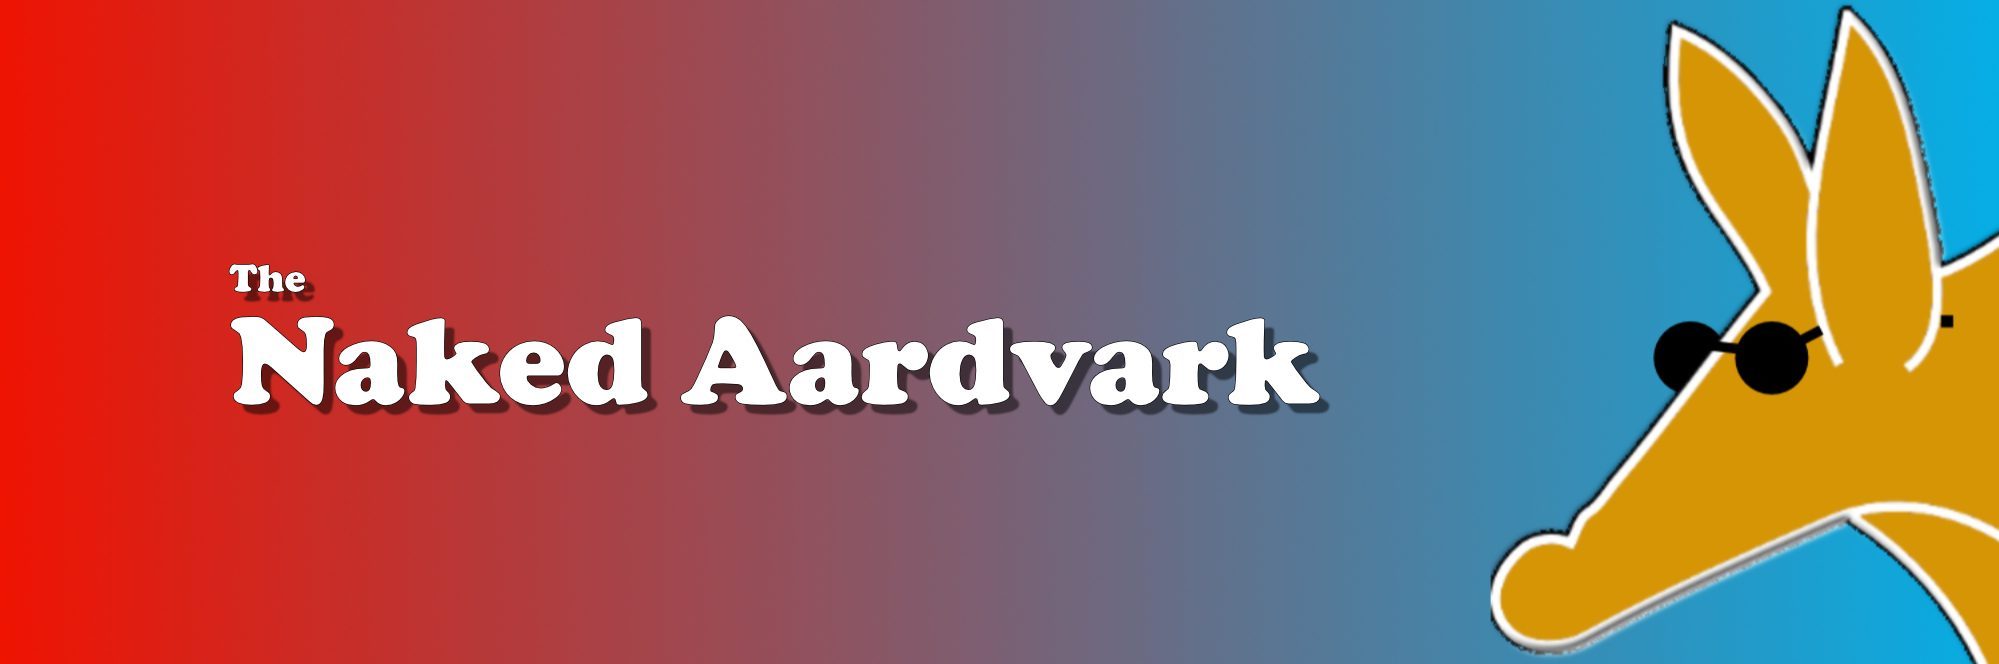 The Naked Aardvark